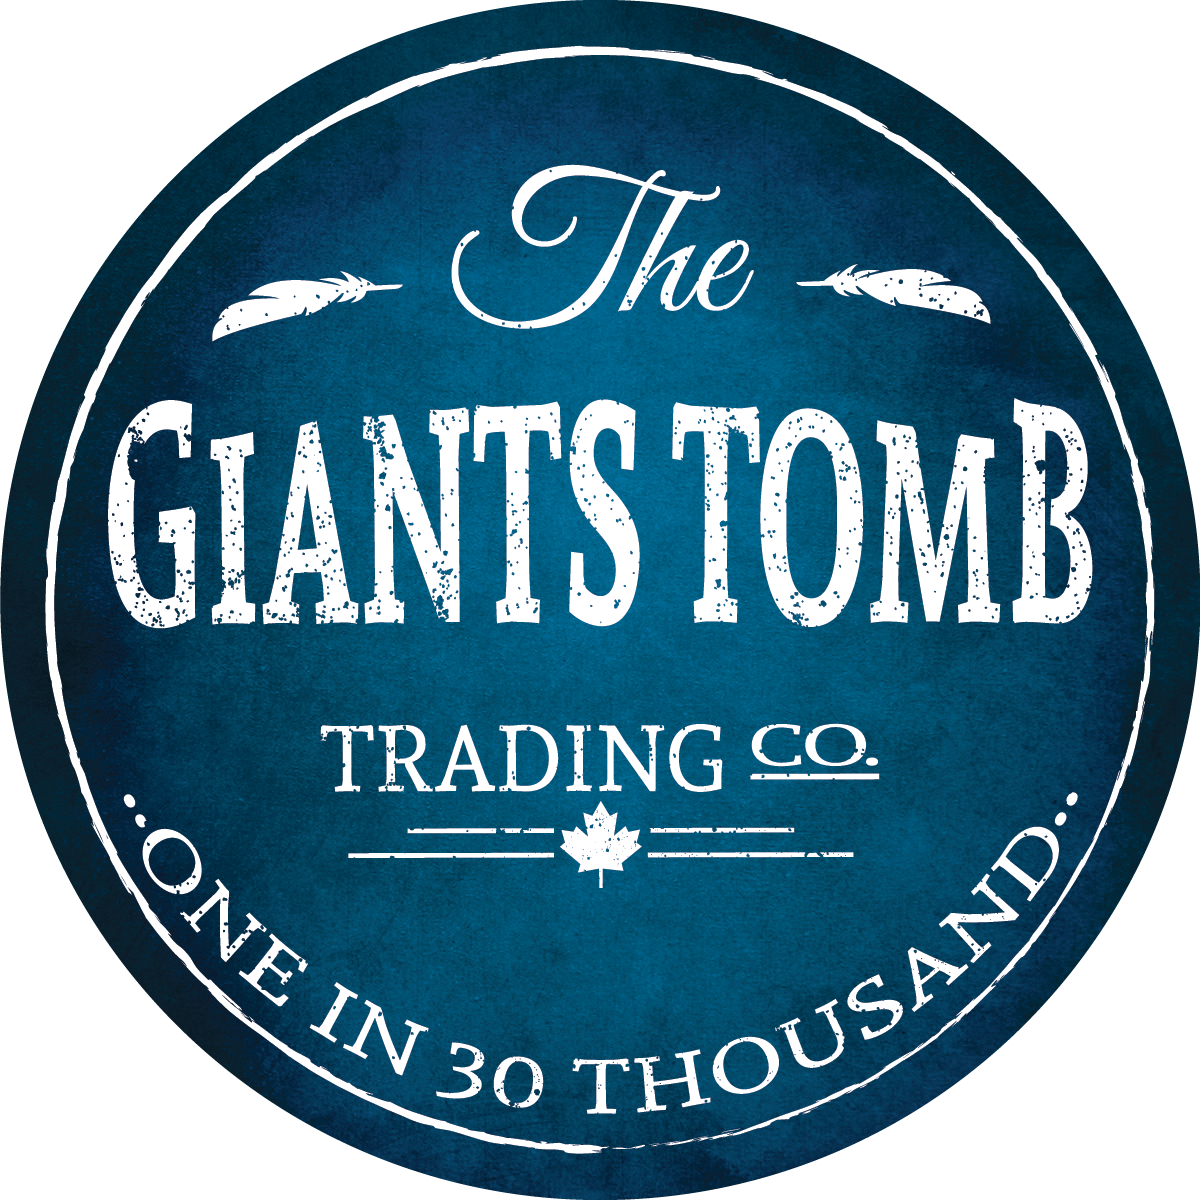 Giants Tomb Trading Co